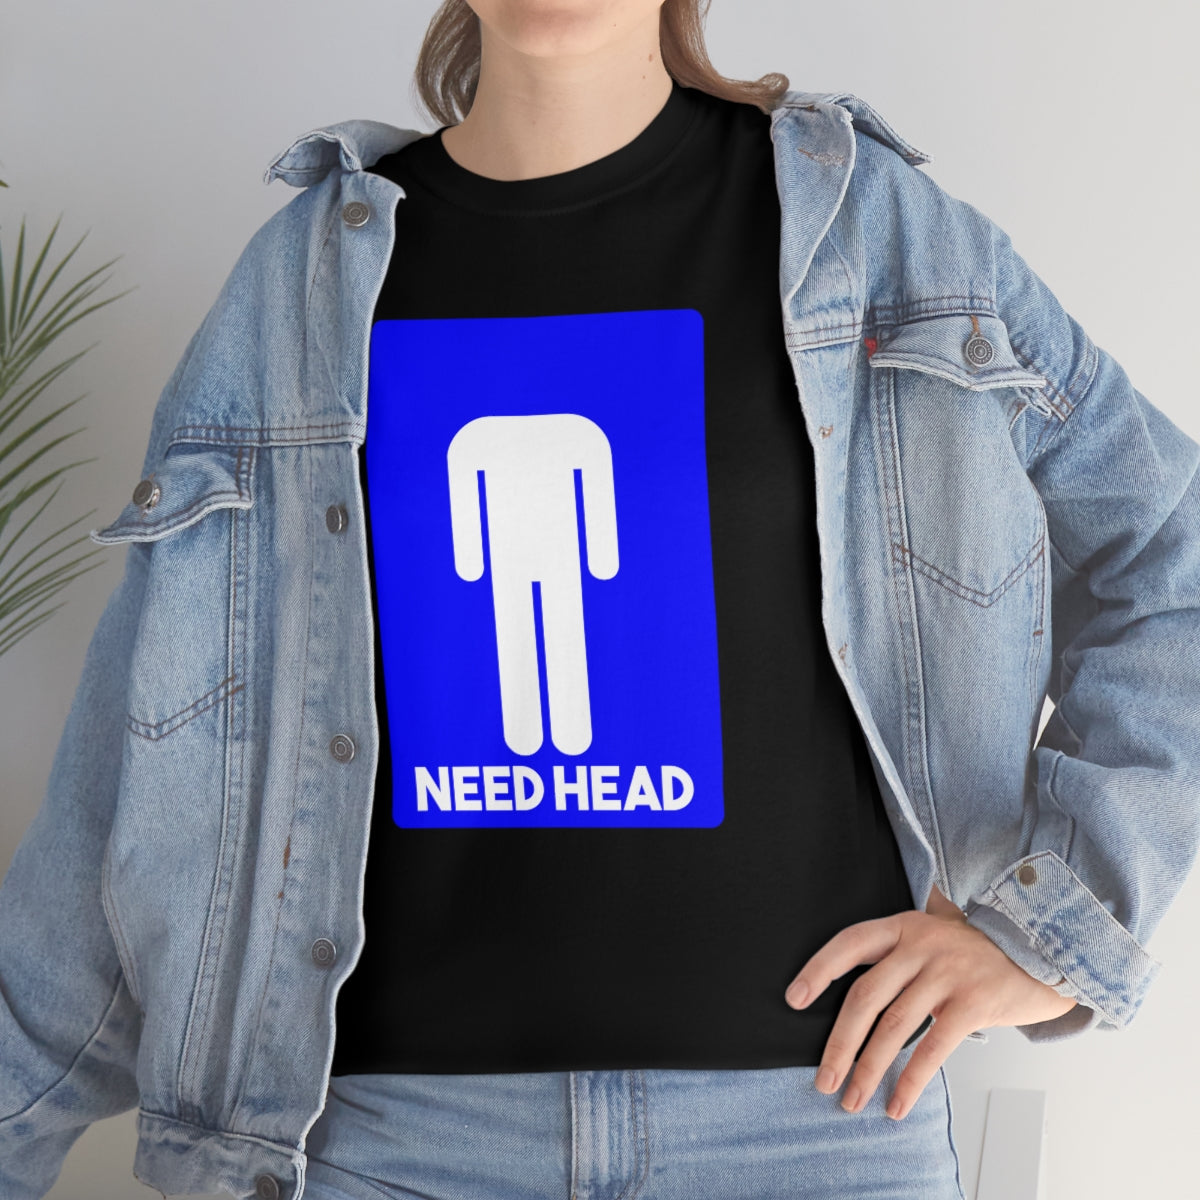 NEED HEAD T-SHIRT